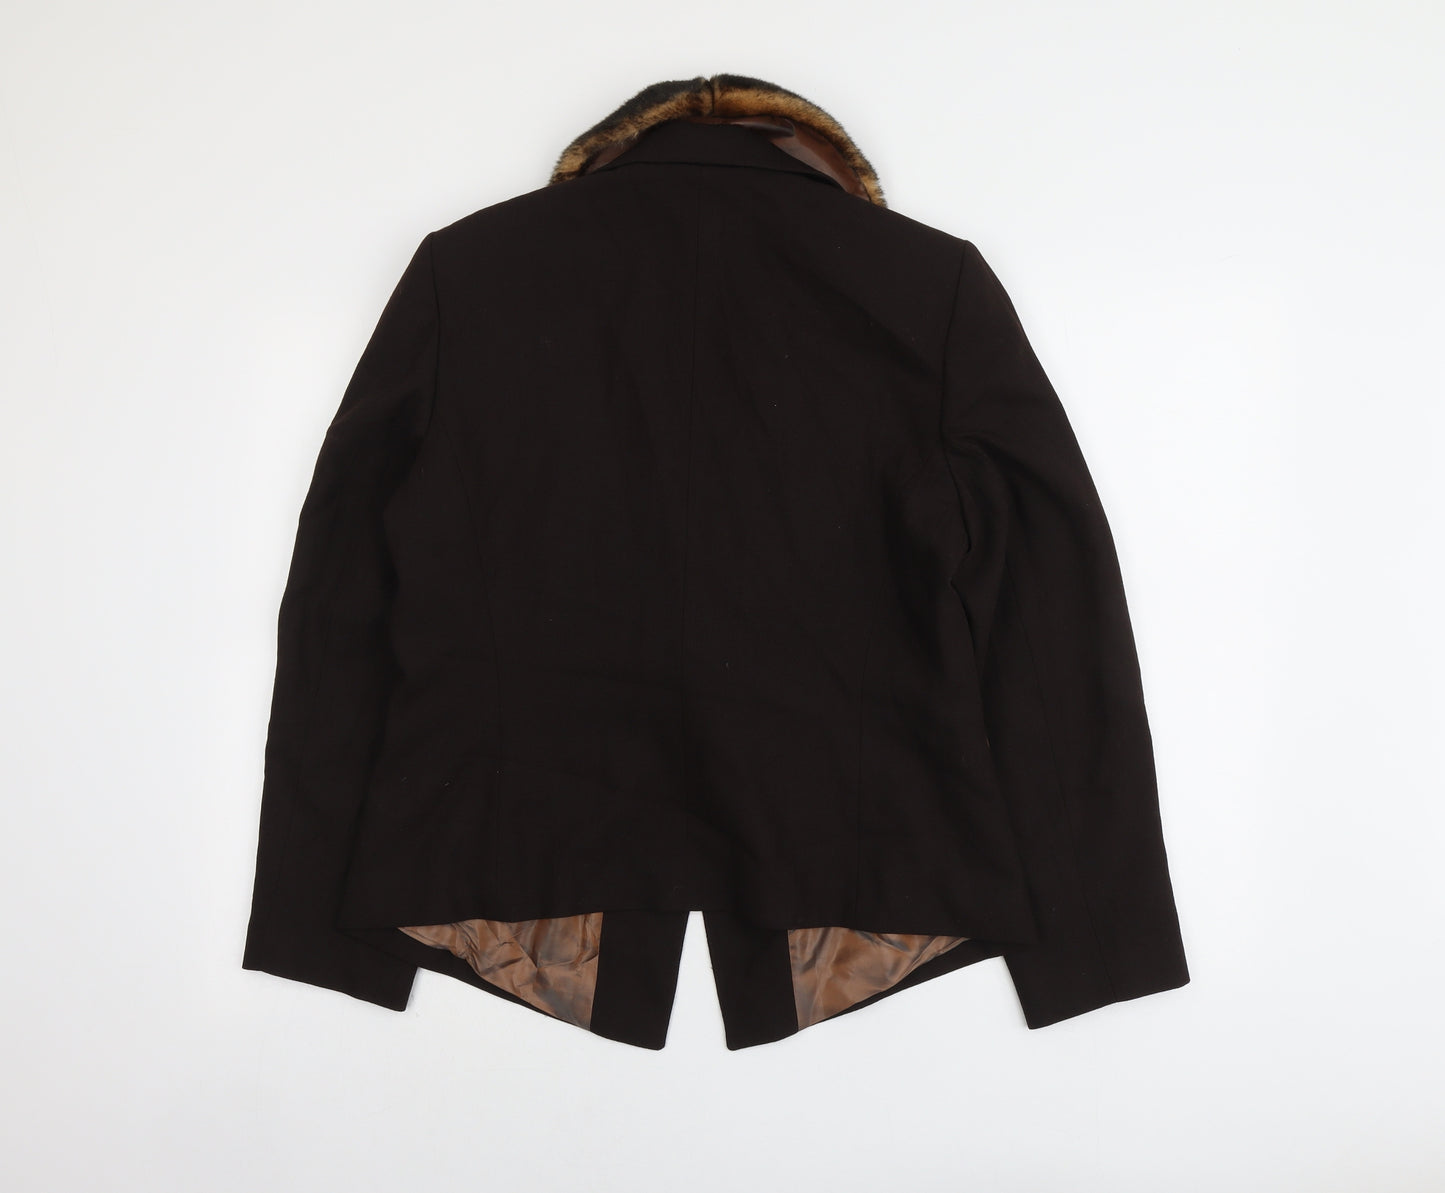 Libra Womens Brown Jacket Blazer Size 14 Button